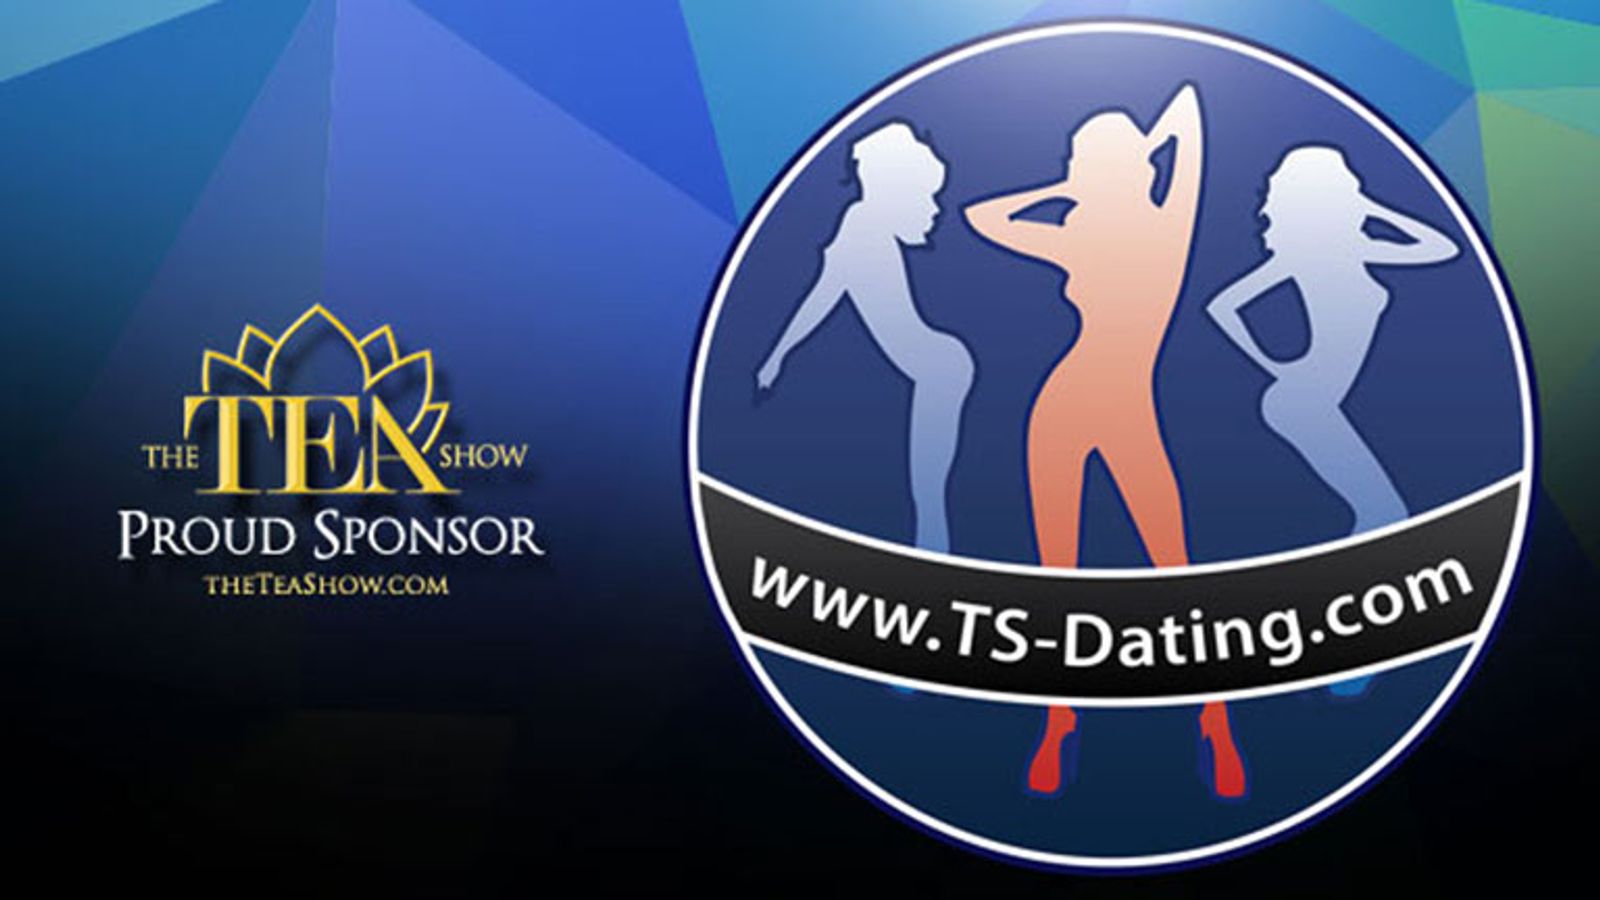 TS Dating Re-Ups Gold Sponsorship of 2017 TEAs